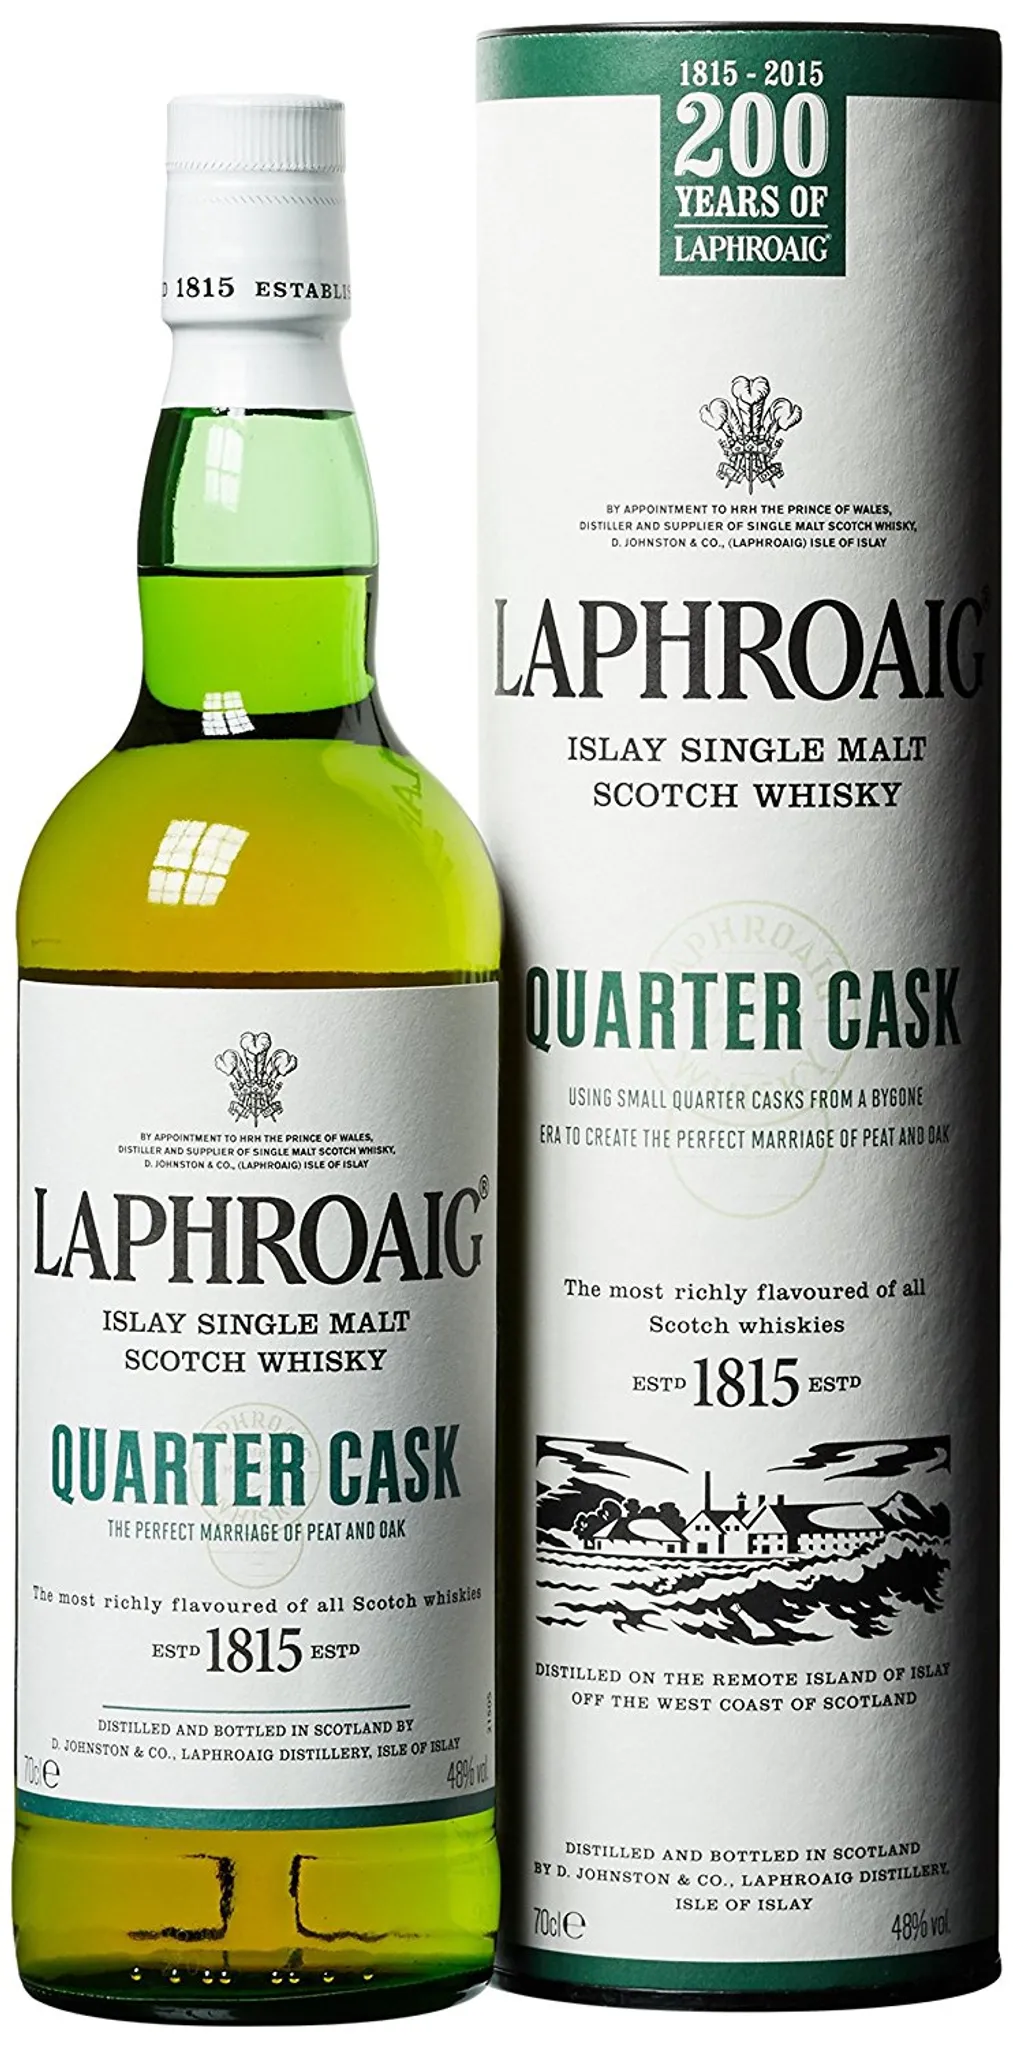 Laphroaig Quarter Cask 0,7L - 48% Vol.